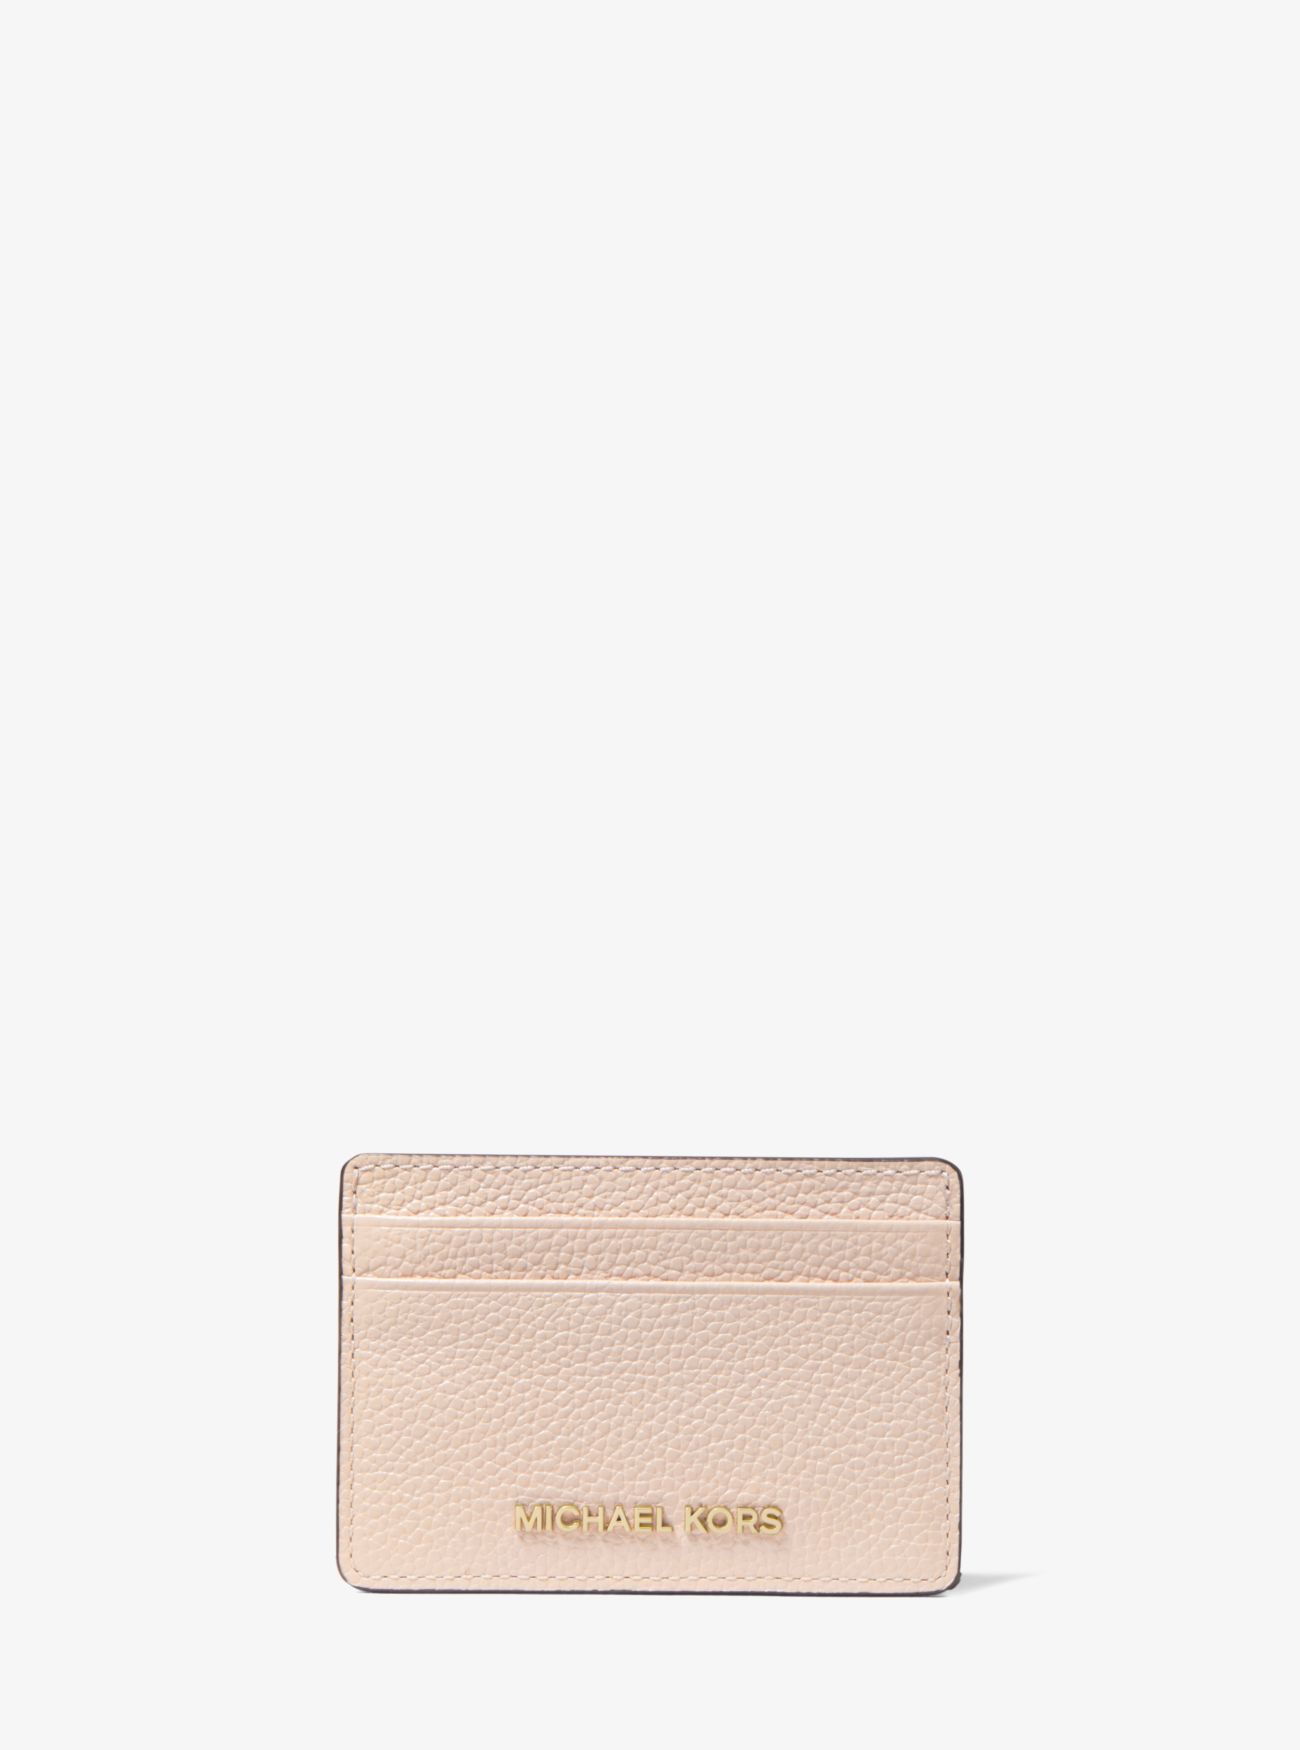 MK Pebbled Leather Card Case - Pink - Michael Kors